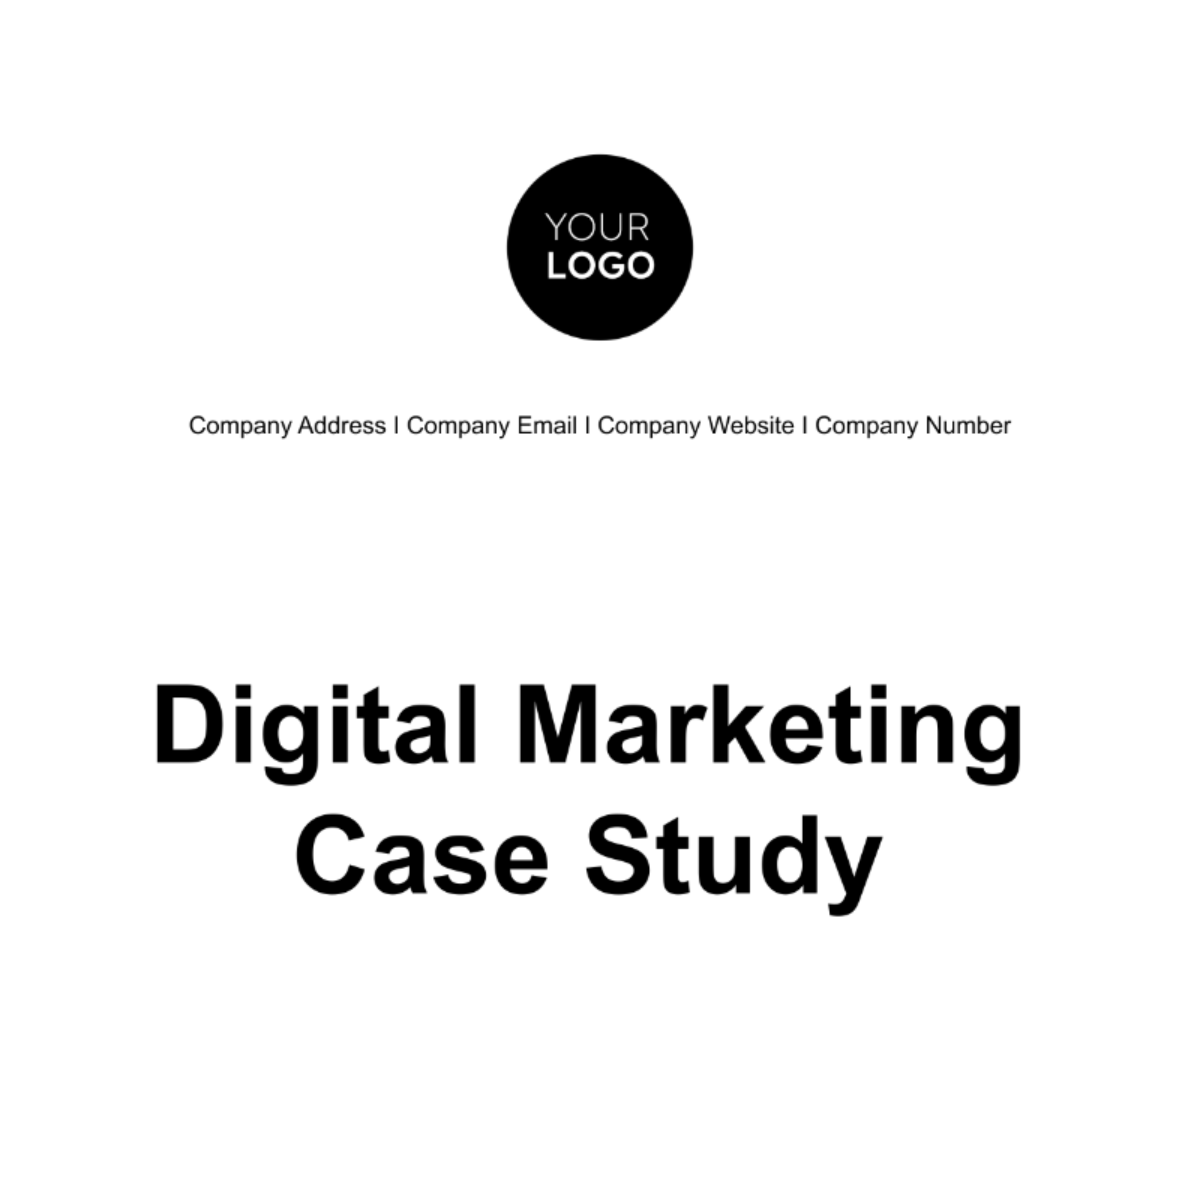 Digital Marketing Case Study Template